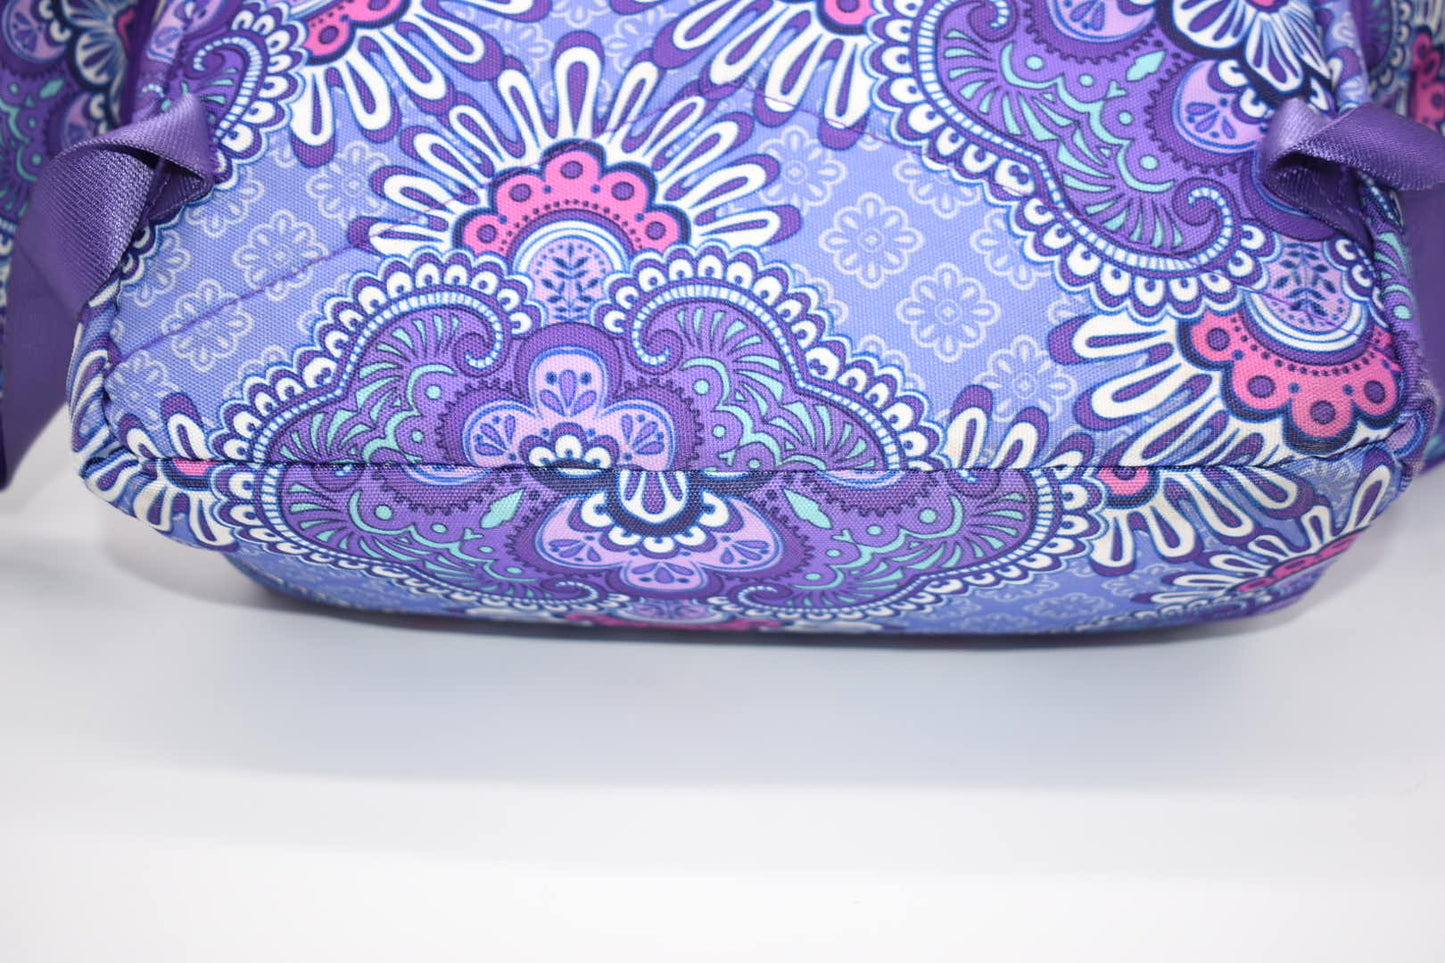 Vera Bradley Lighten Up Drawstring Backpack in "Lilac Tapestry" Pattern